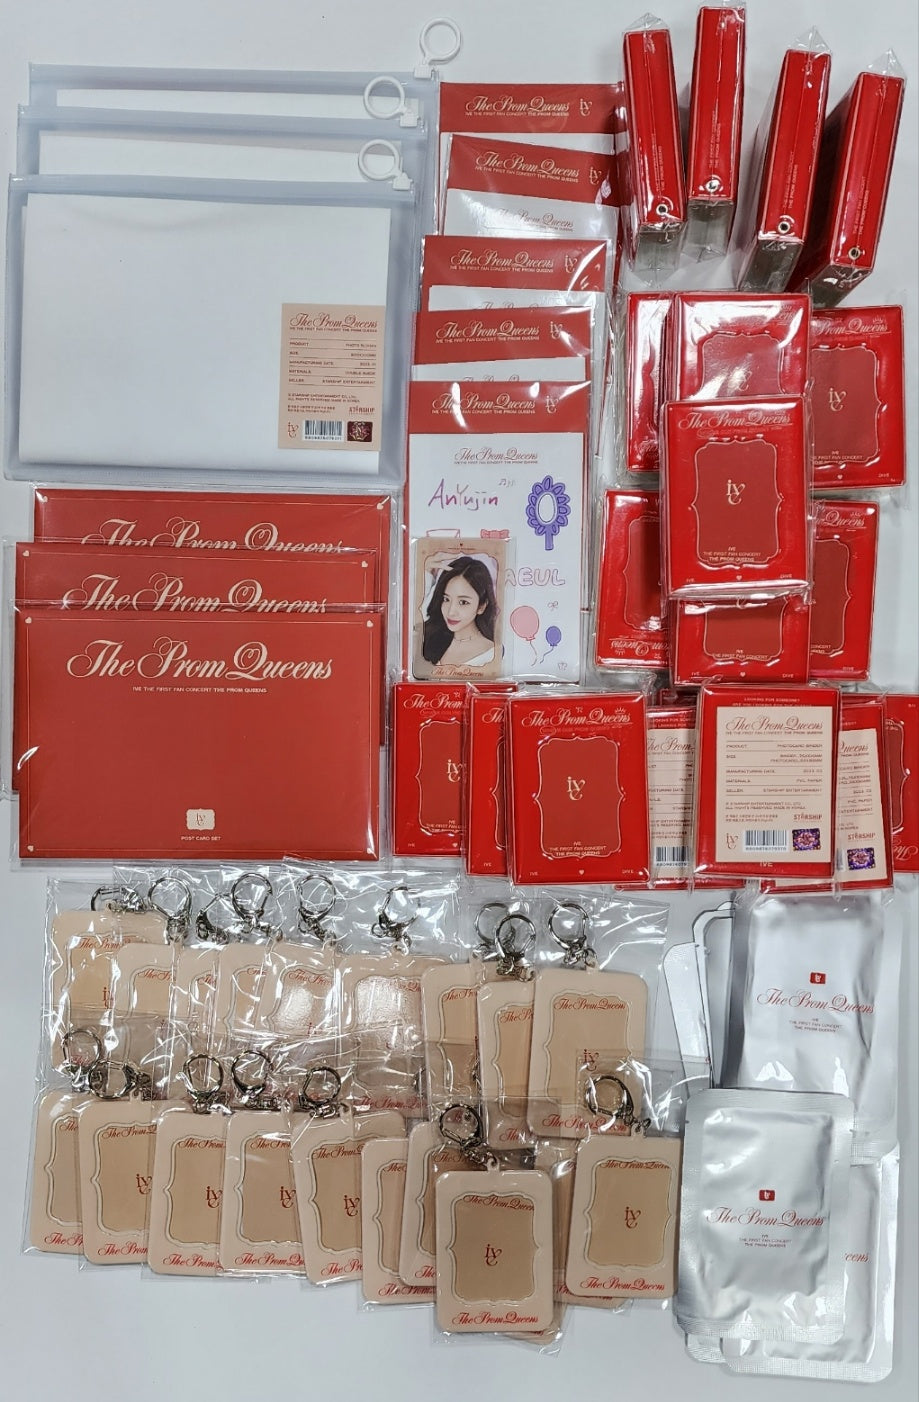 IVE "The Prom Queens" 1st Fan-Concert - Official MD [PVC CARD Horder, Photocard Binder, Photocard Deco Set, Postcard Set]